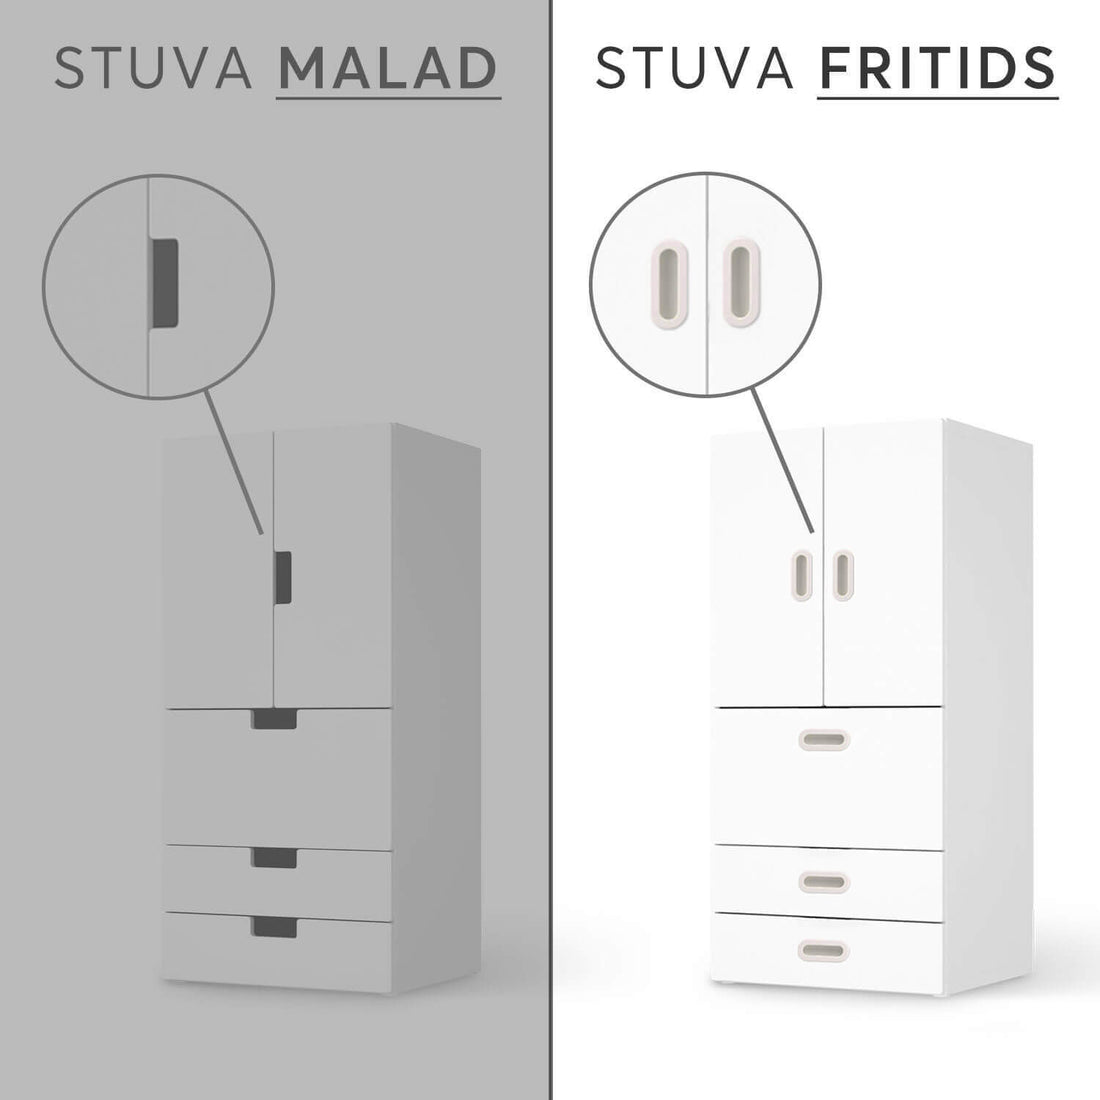 Vergleich IKEA Stuva Fritids / Malad - Flying Animals